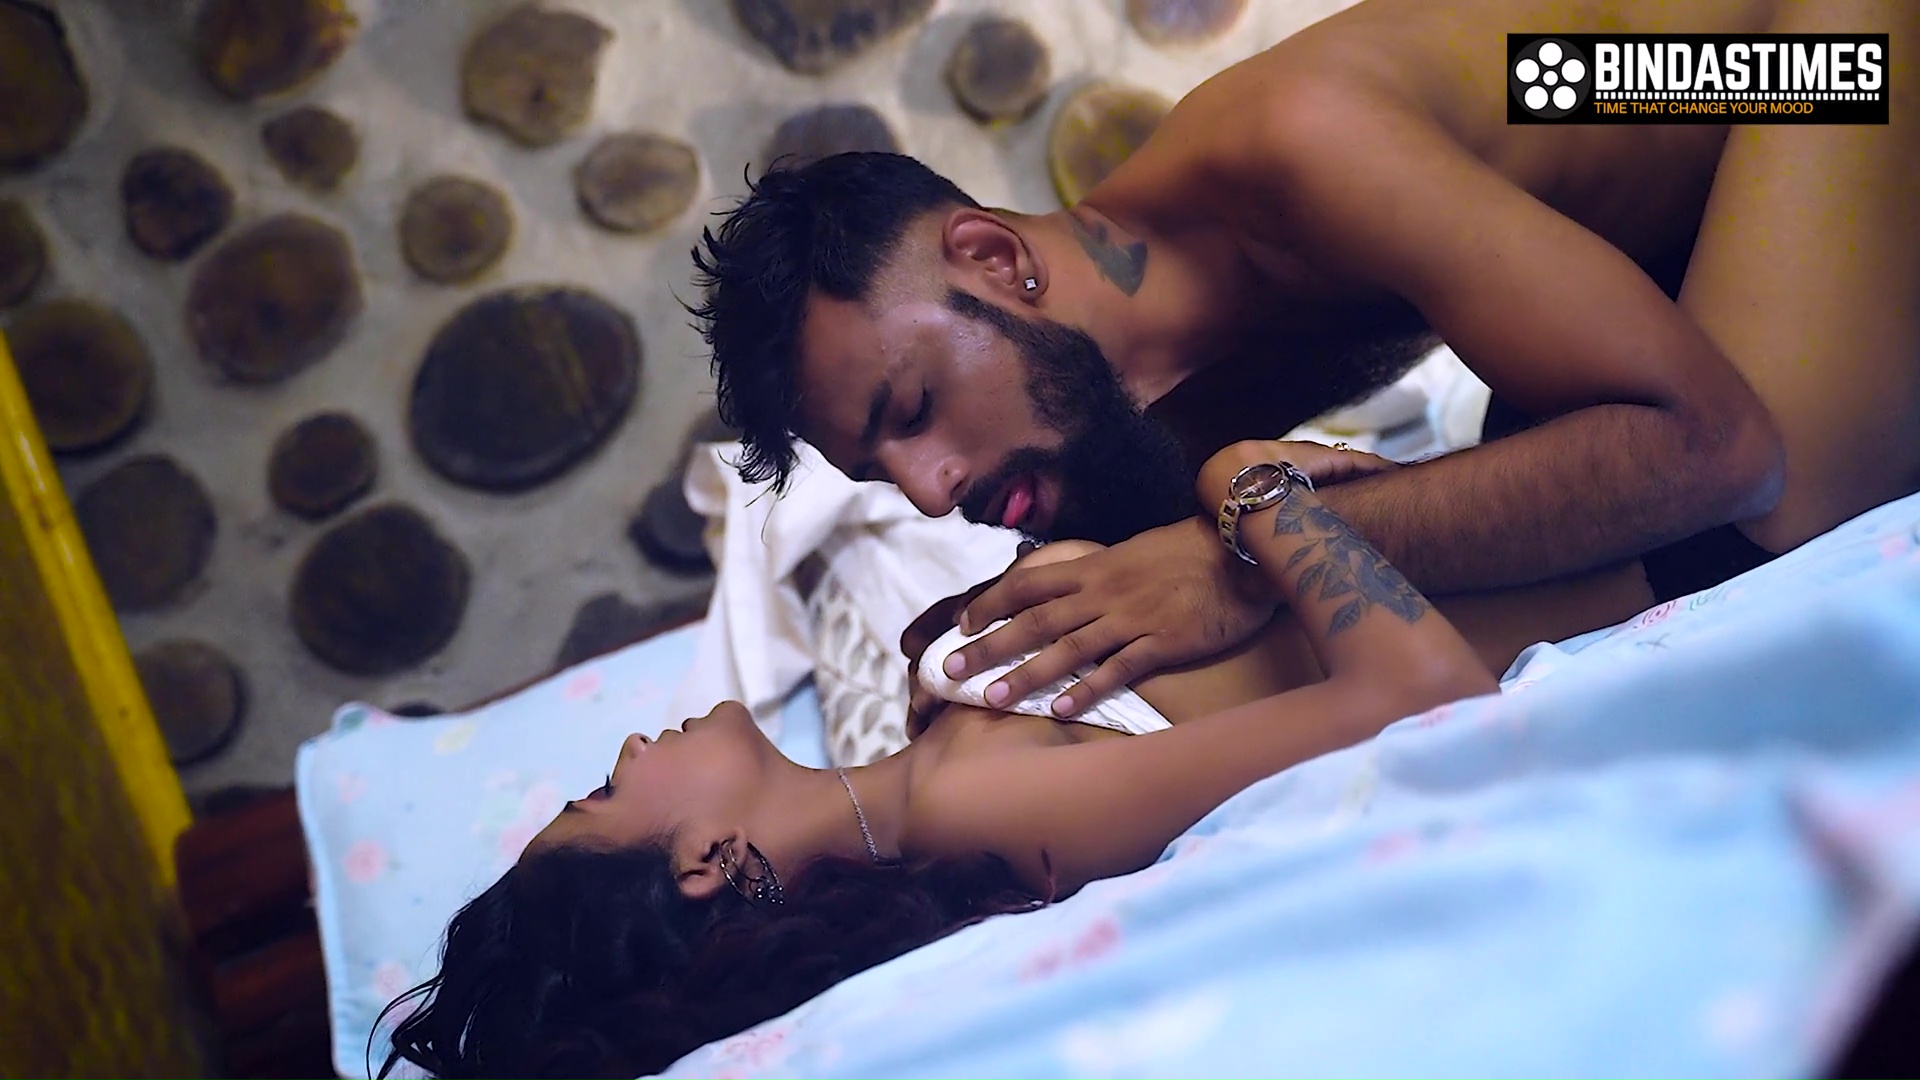 Sudipa’s Honeymoon Paharo Thukai (2022) Hindi | x264 WEB-DL | 1080p | 720p | 480p | BindasTimes Short Films | Download | Watch Online | GDrive | Direct Links